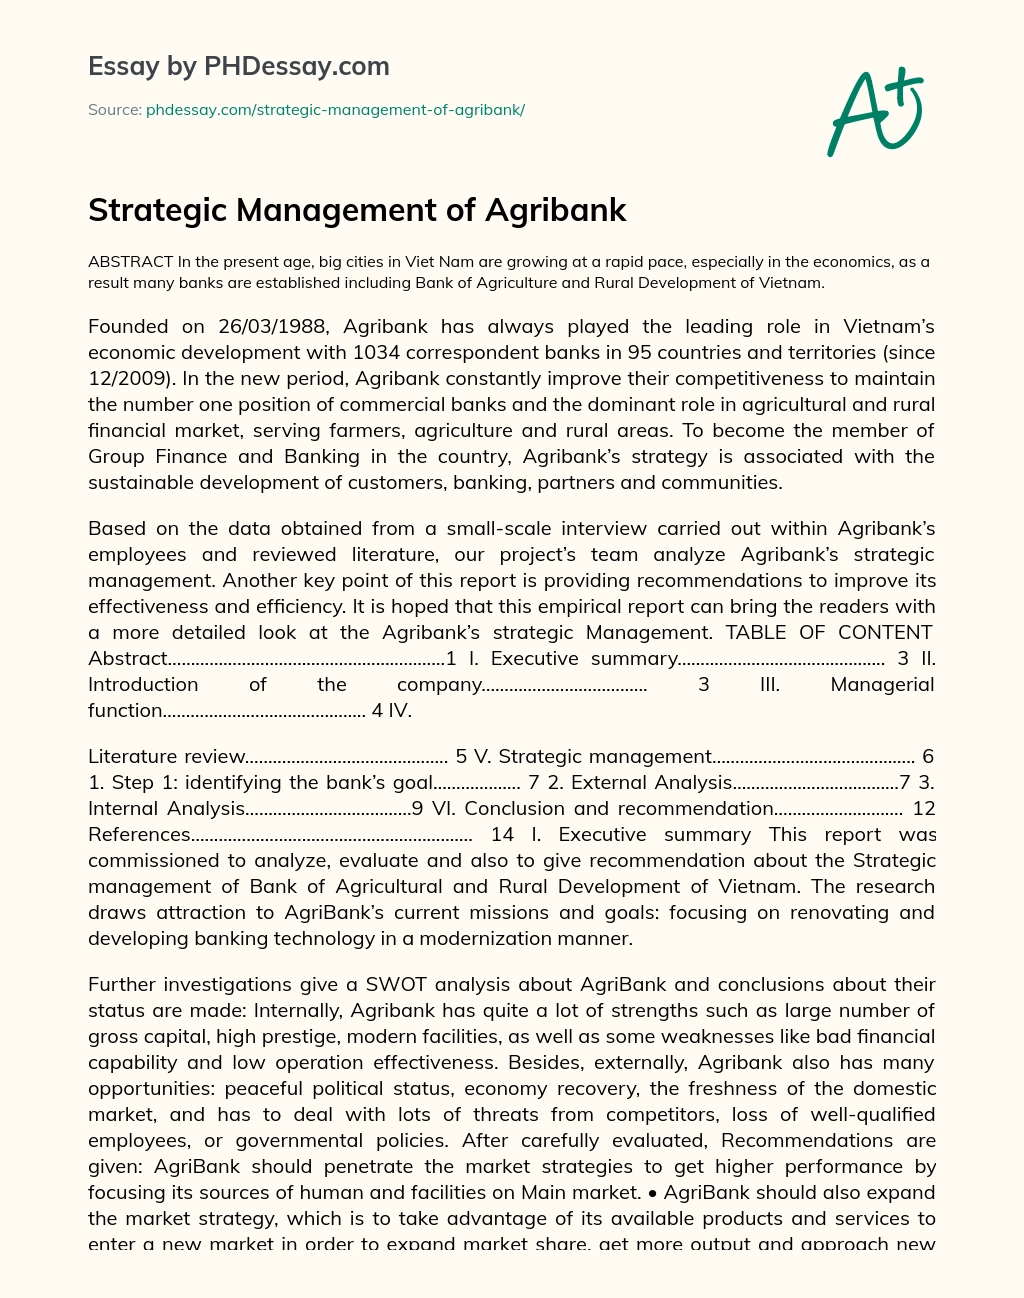 Strategic Management of Agribank essay